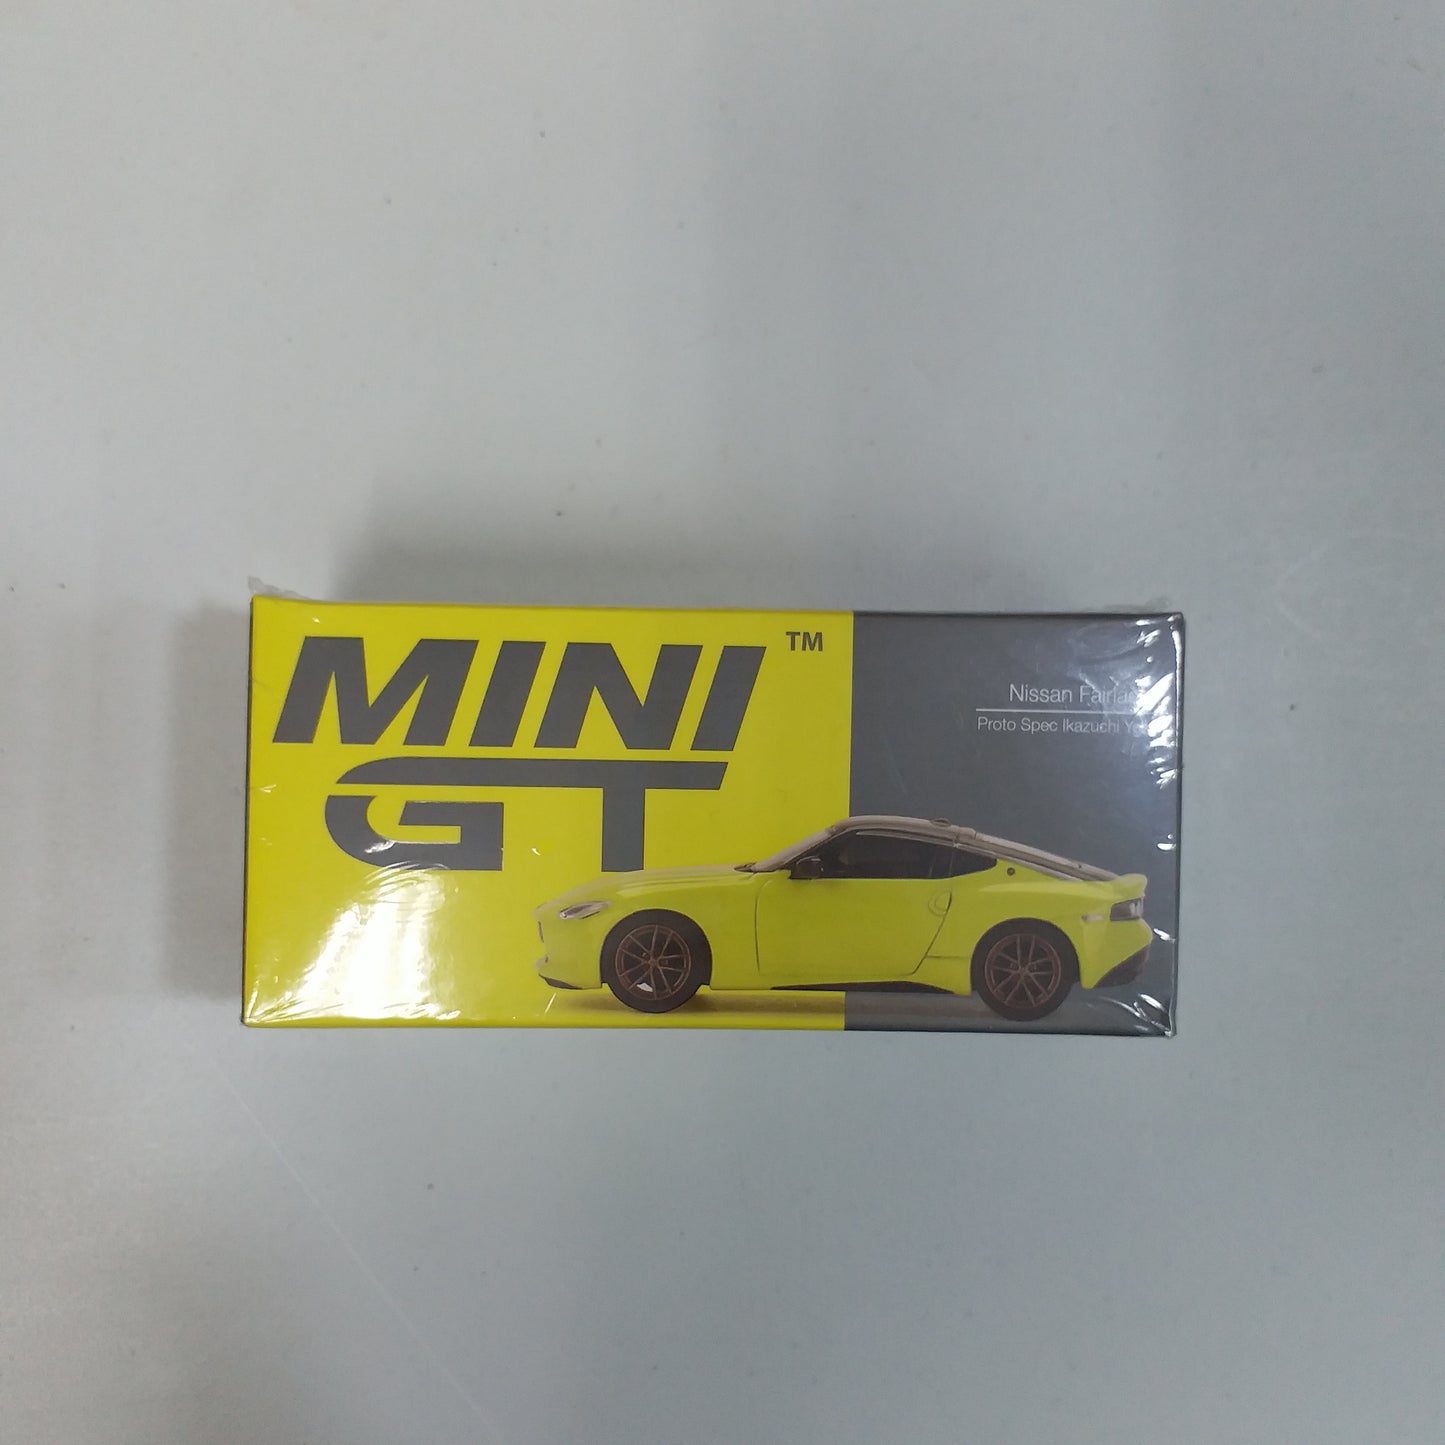 Mini GT #414 Nissan Fairlady Proto Spec Ikazuchi Yellow 1:64 scale